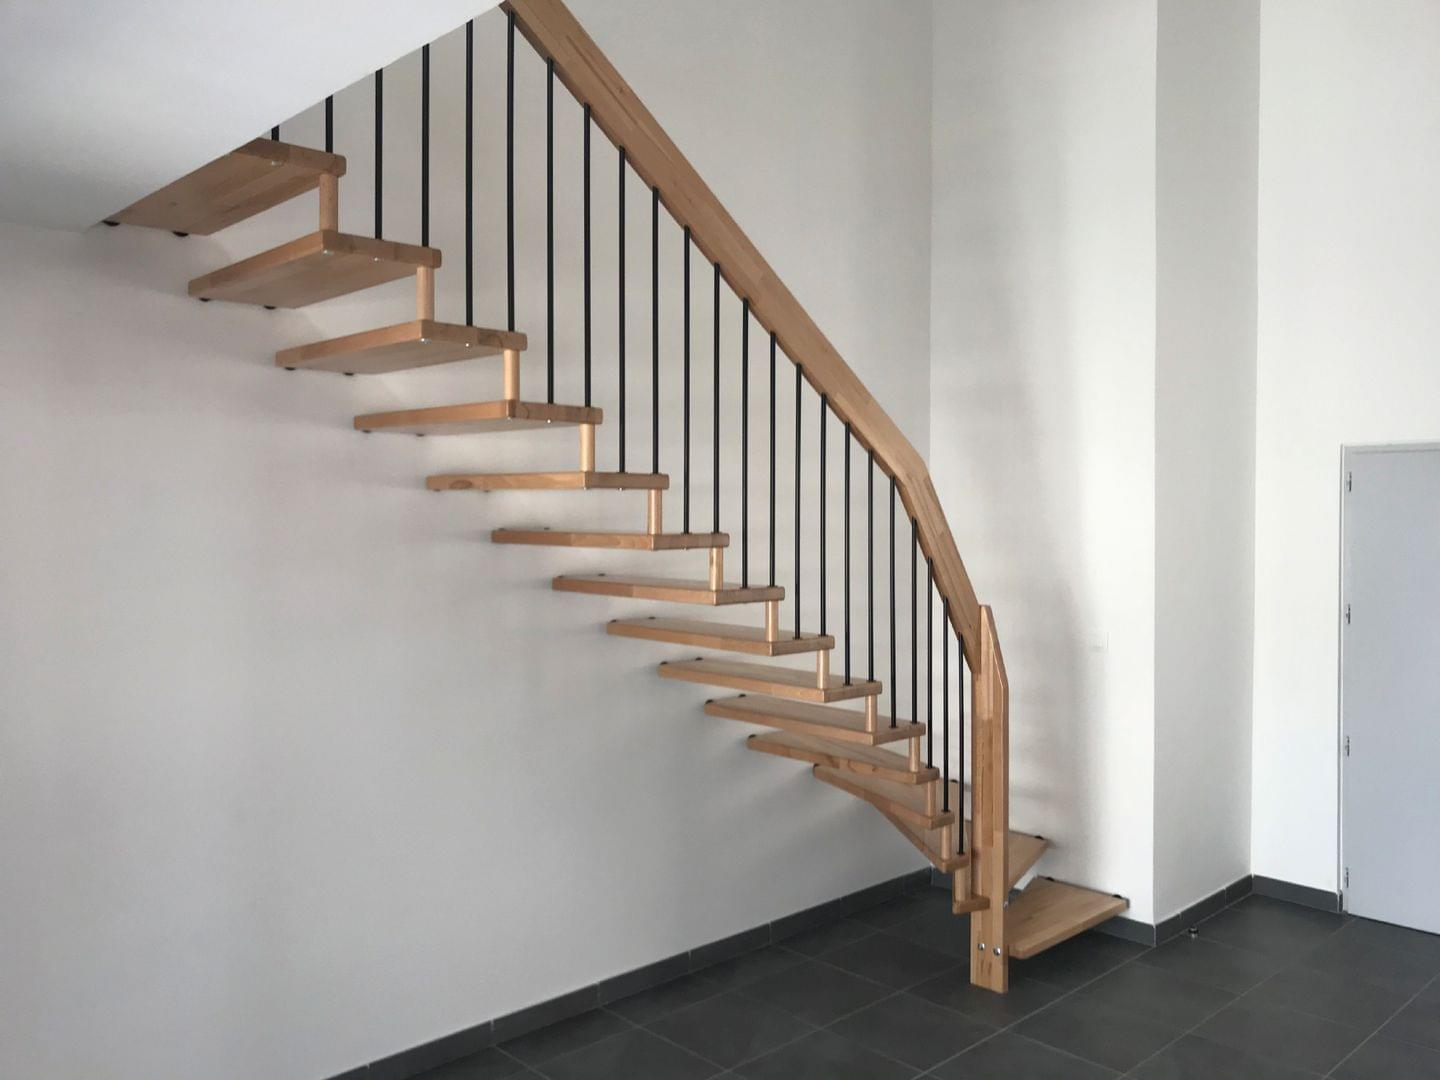 Escalier bois, fabrication et rénovation - TREPPENMEISTER